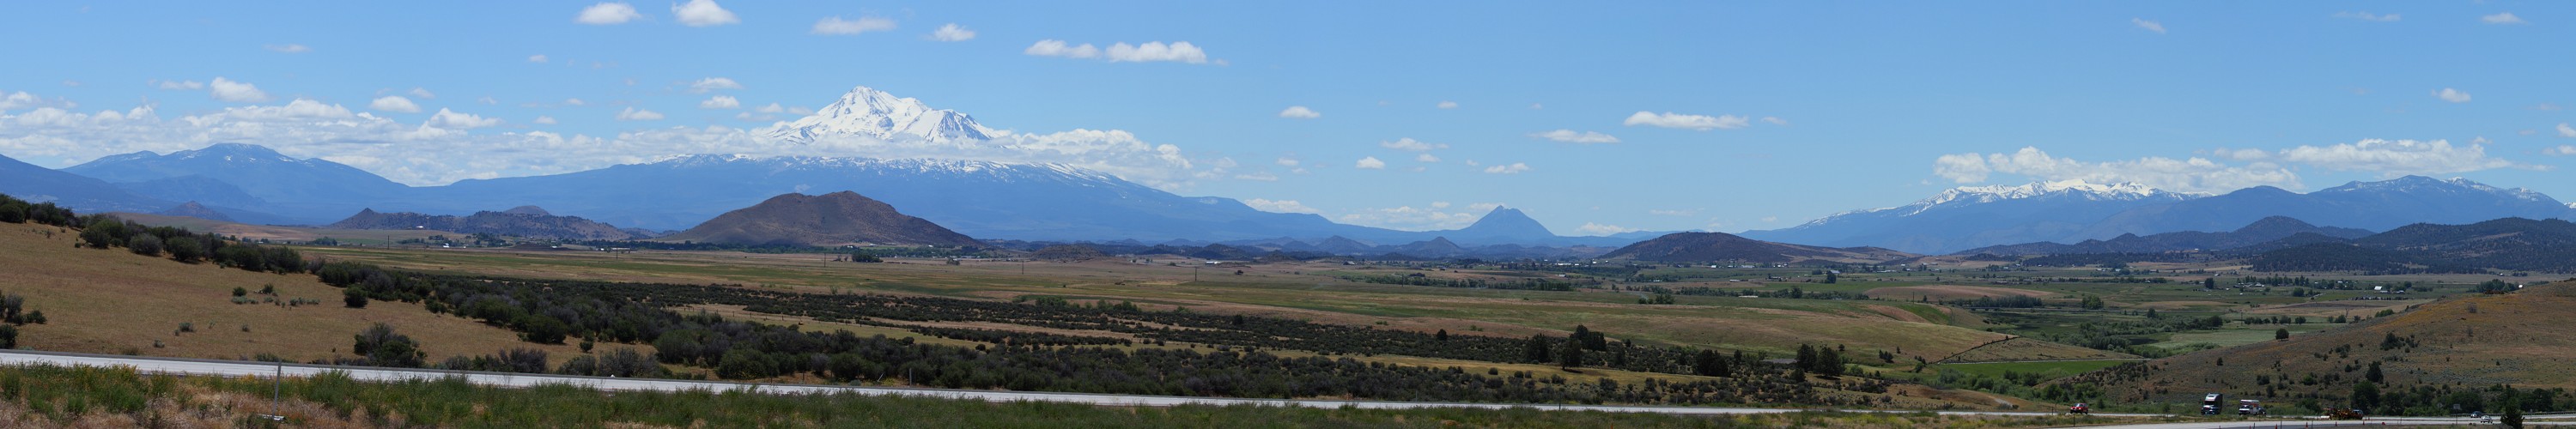 Mount Shasta panorama